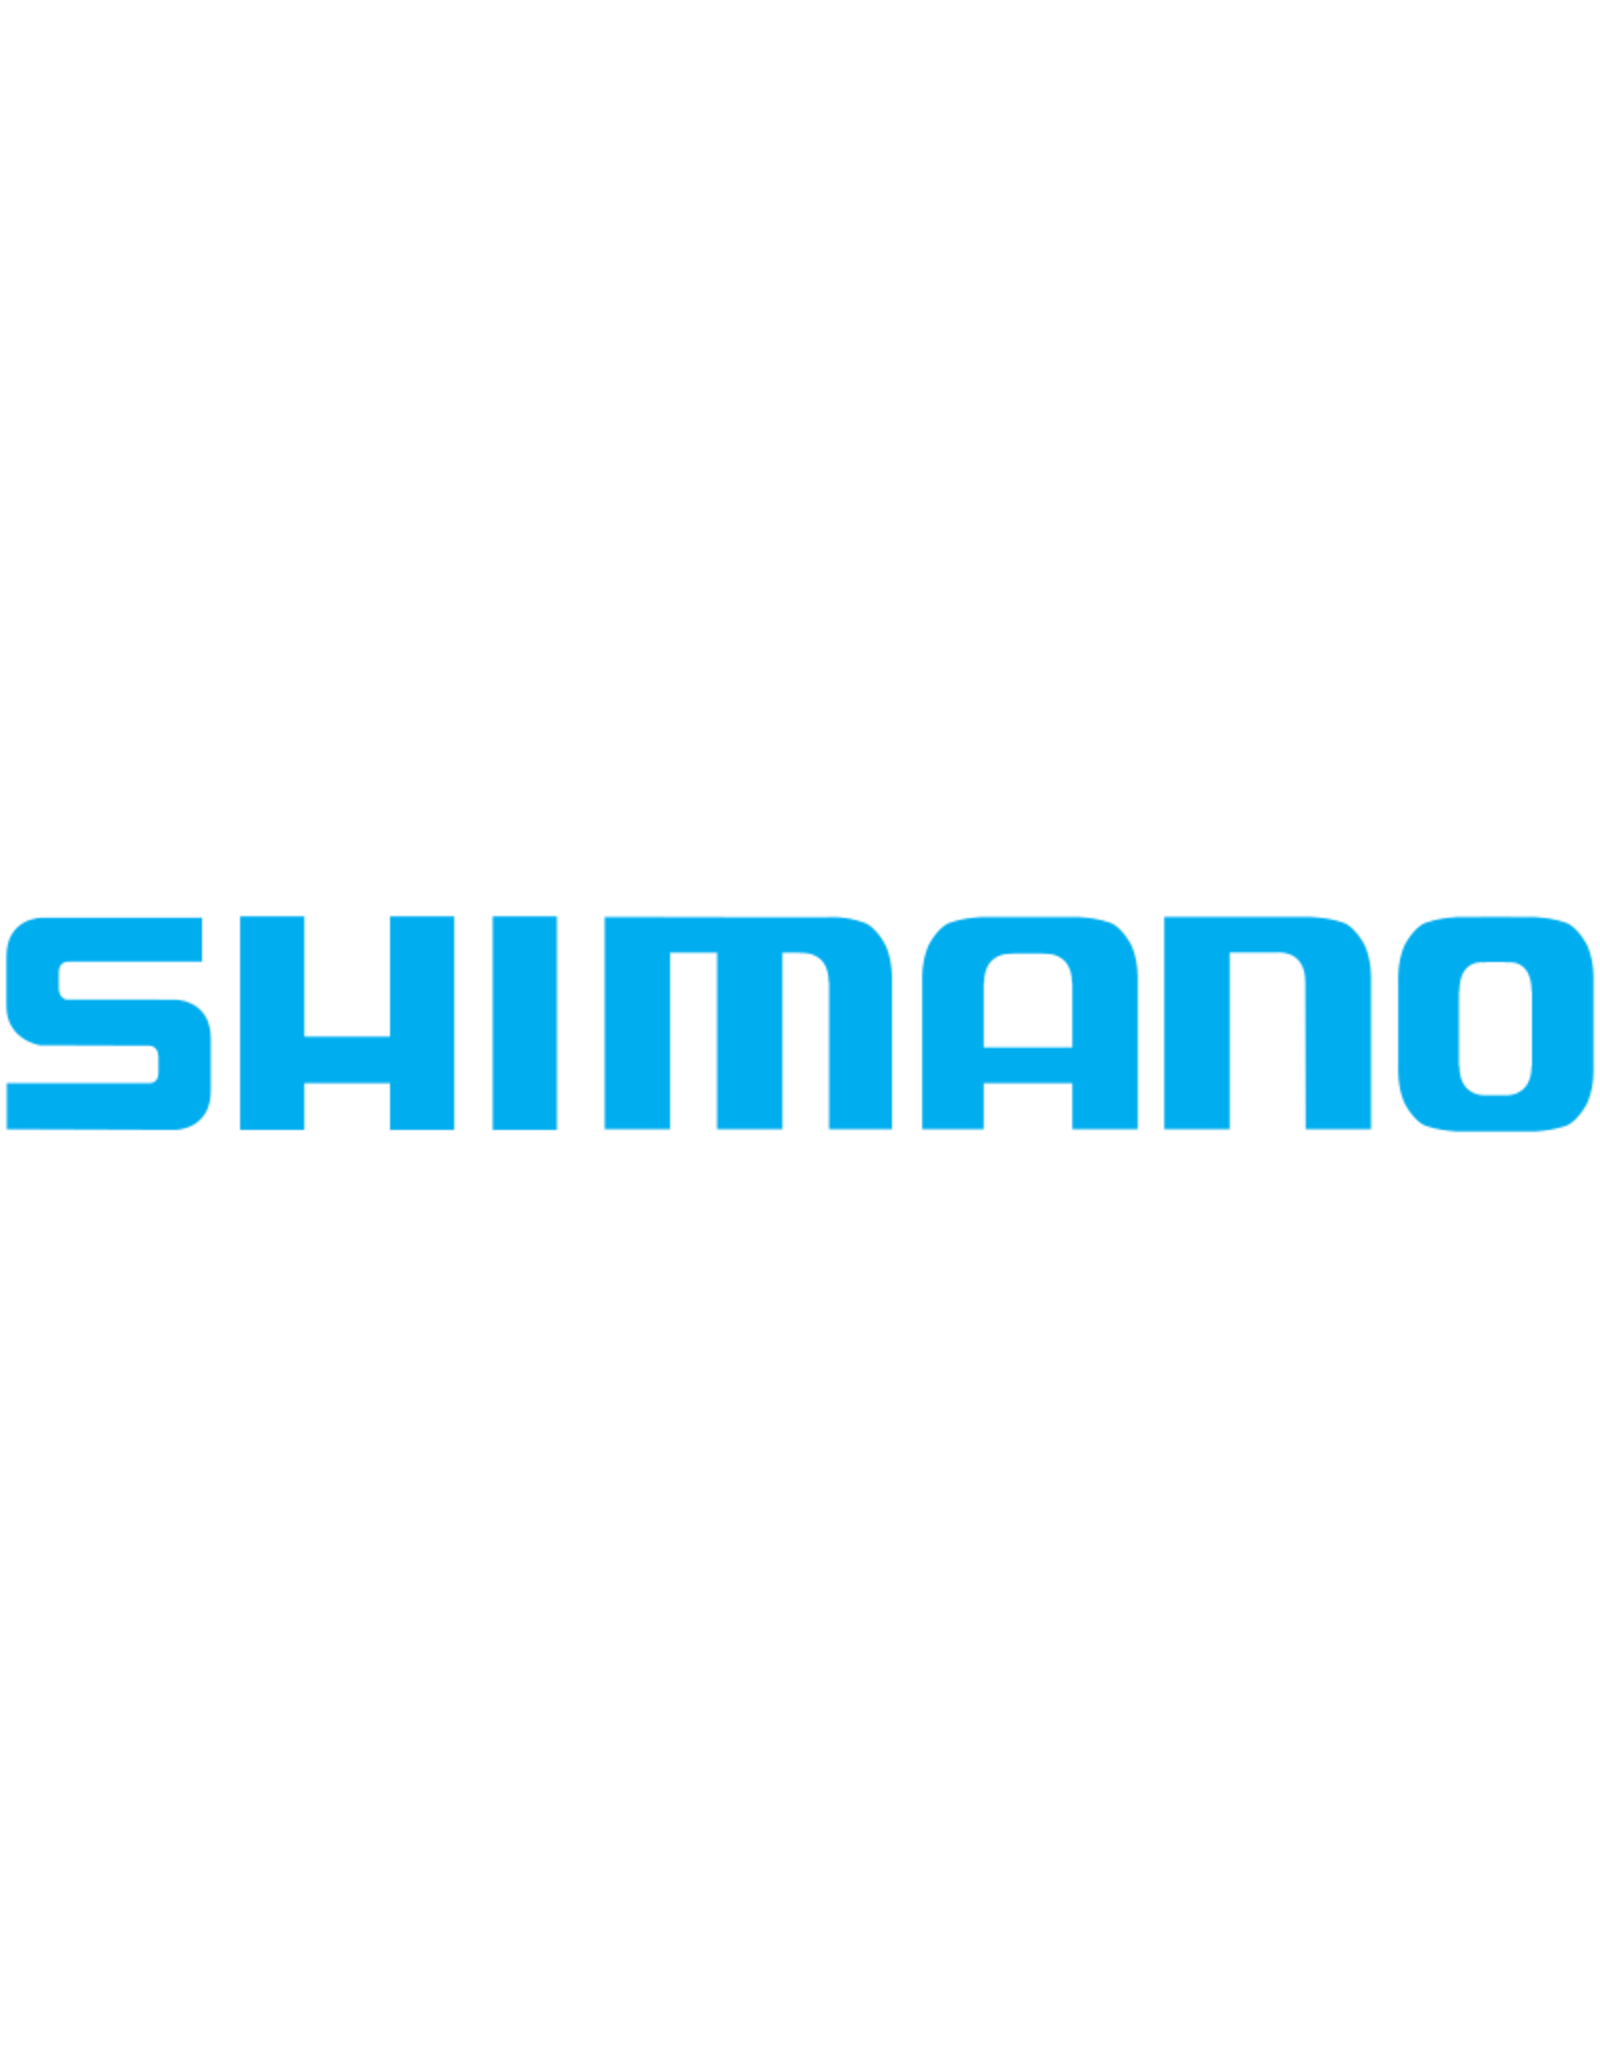 Shimano BNT0247  DRIVE SHAFT/NLA